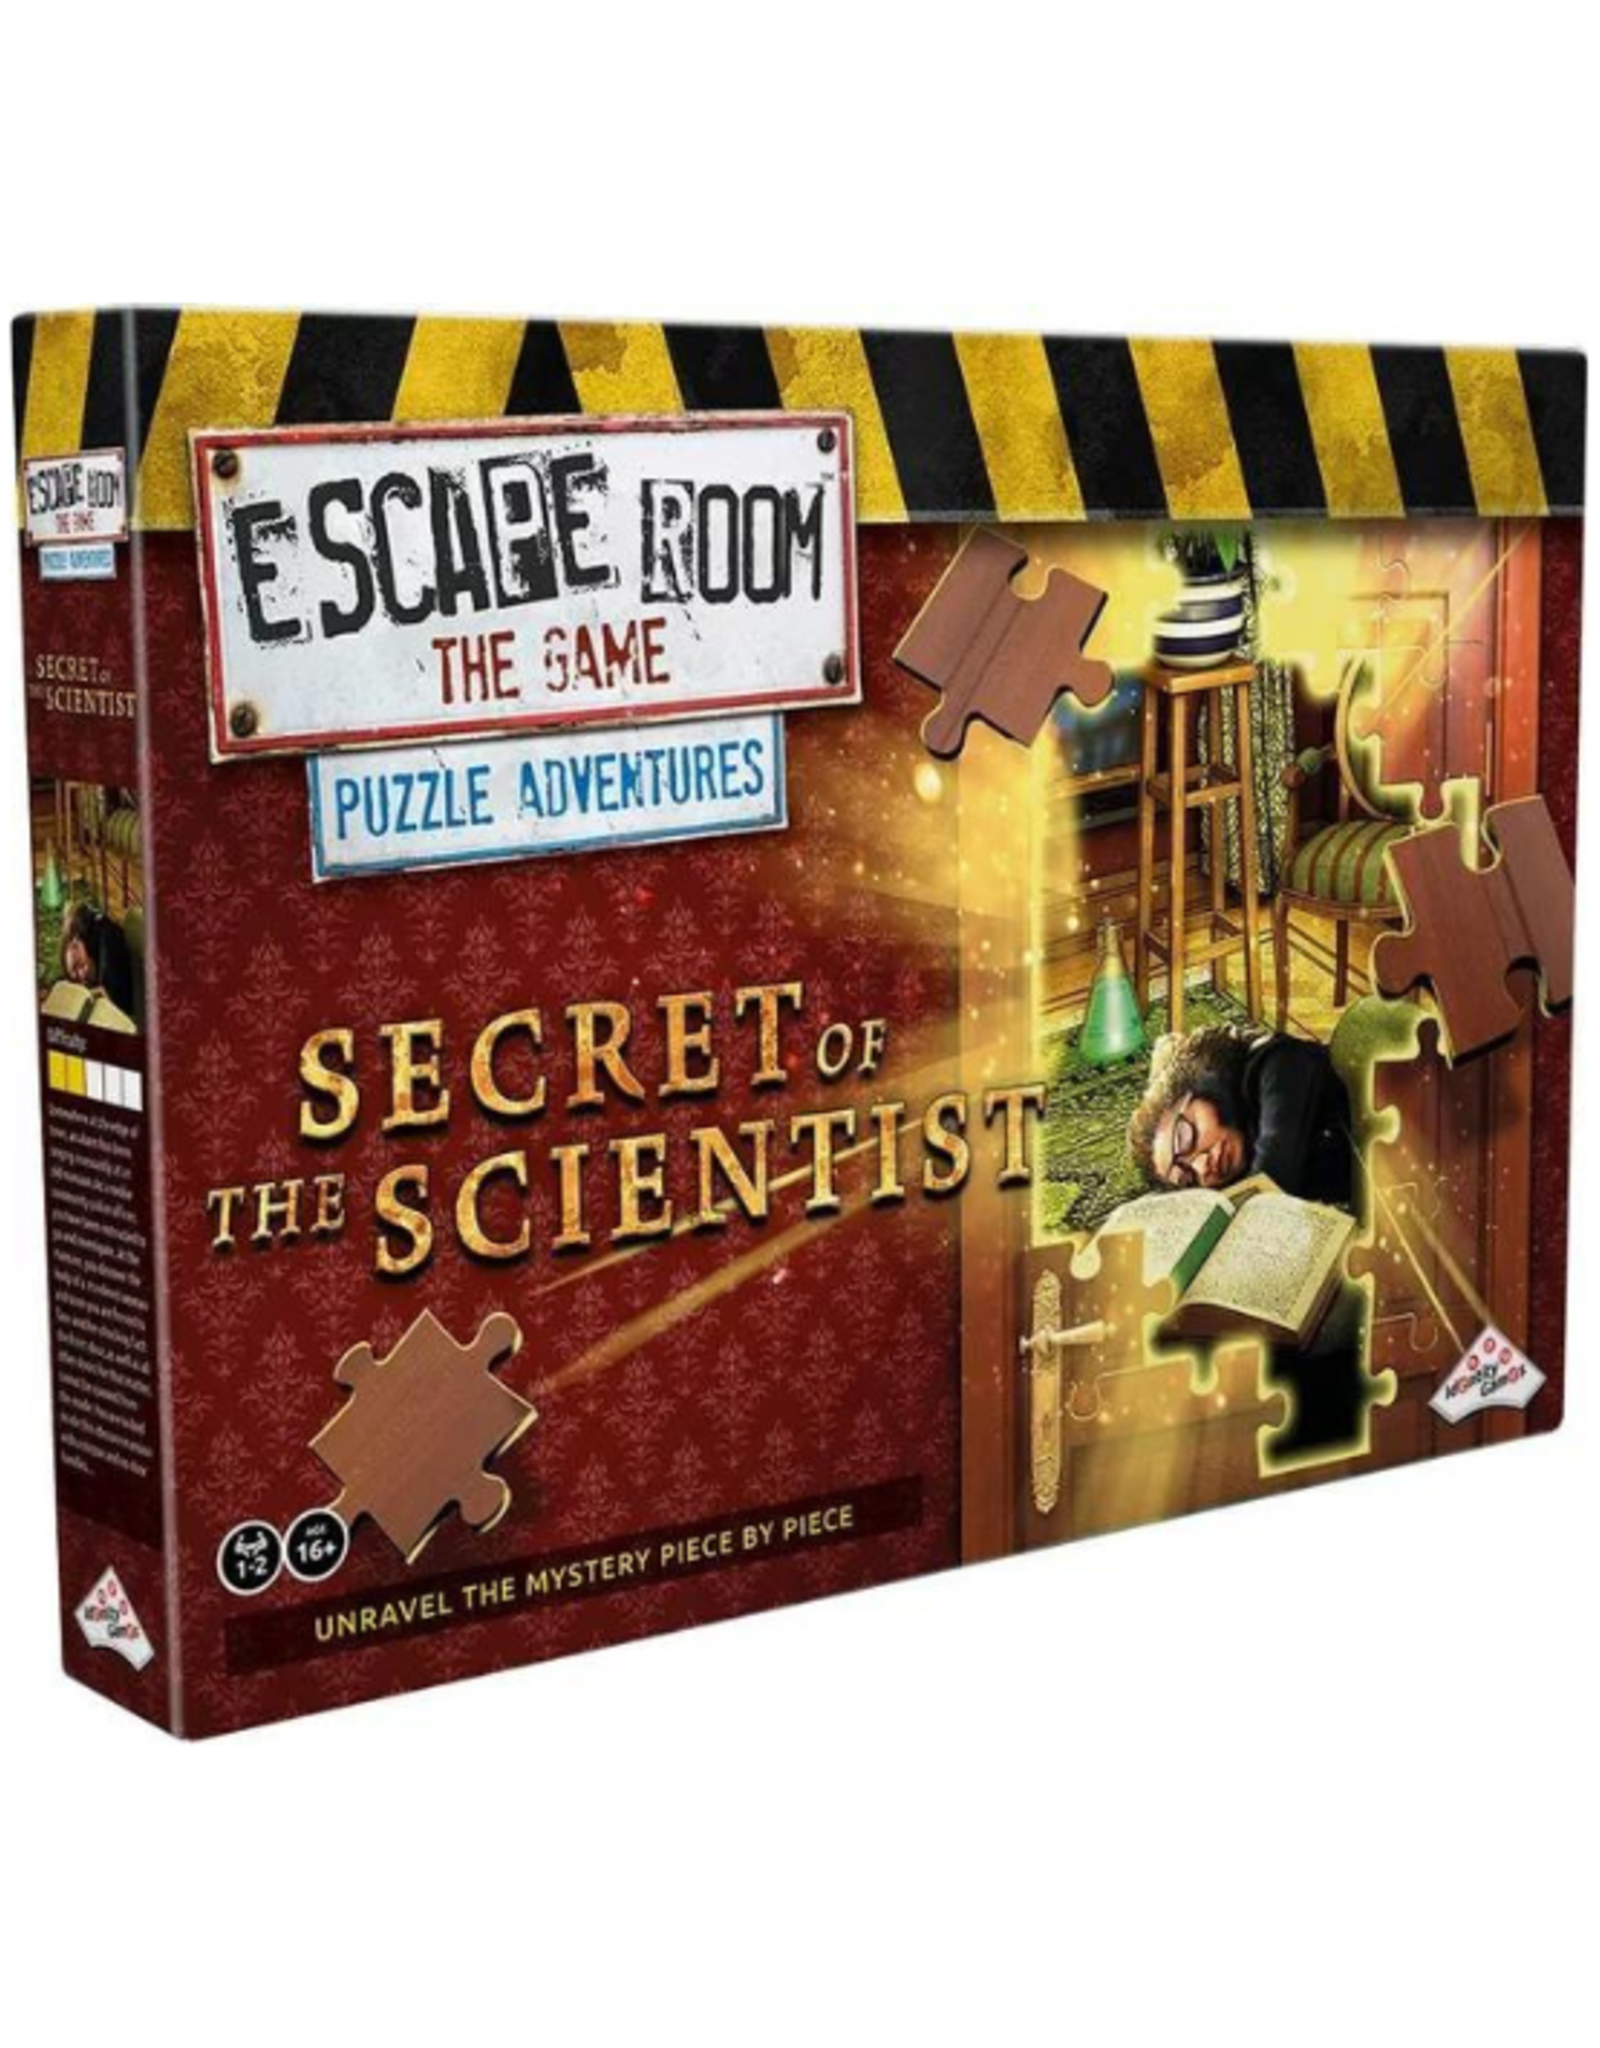 Escape Room The Game - Puzzle Adventures Secret of the Scientist